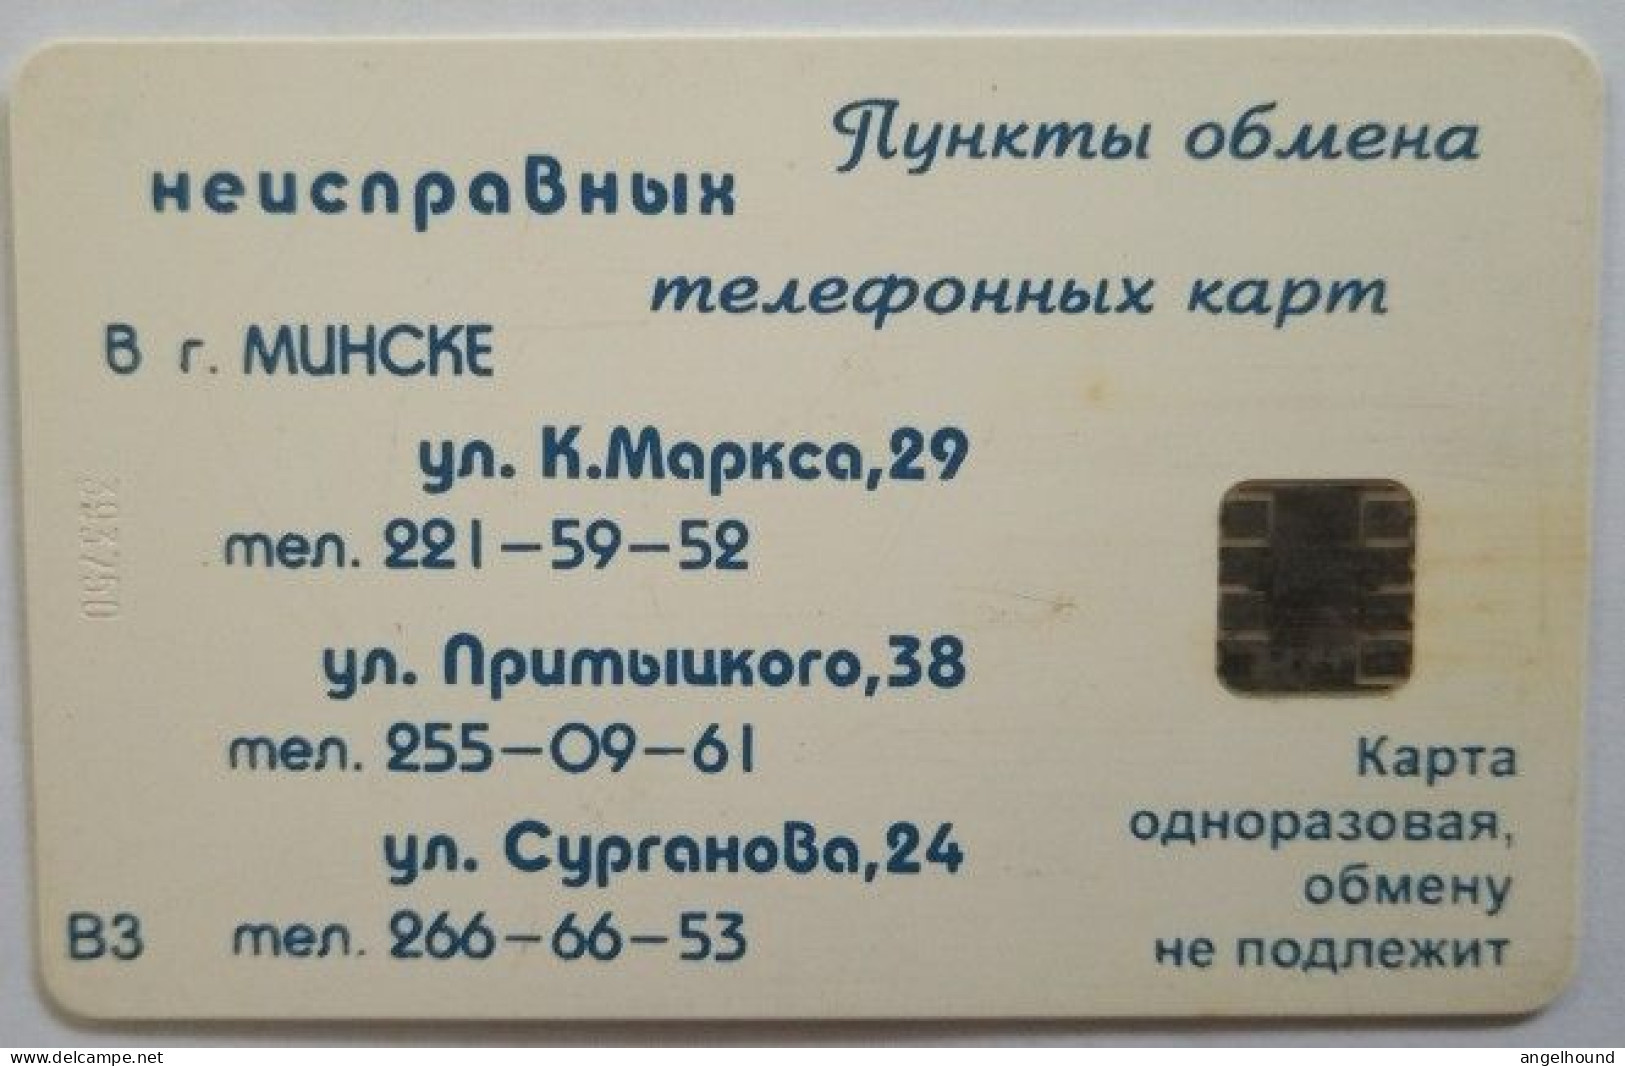 Belarus 120 Unit Chip Card - Slaviansky Bazar ' 98 - Belarus